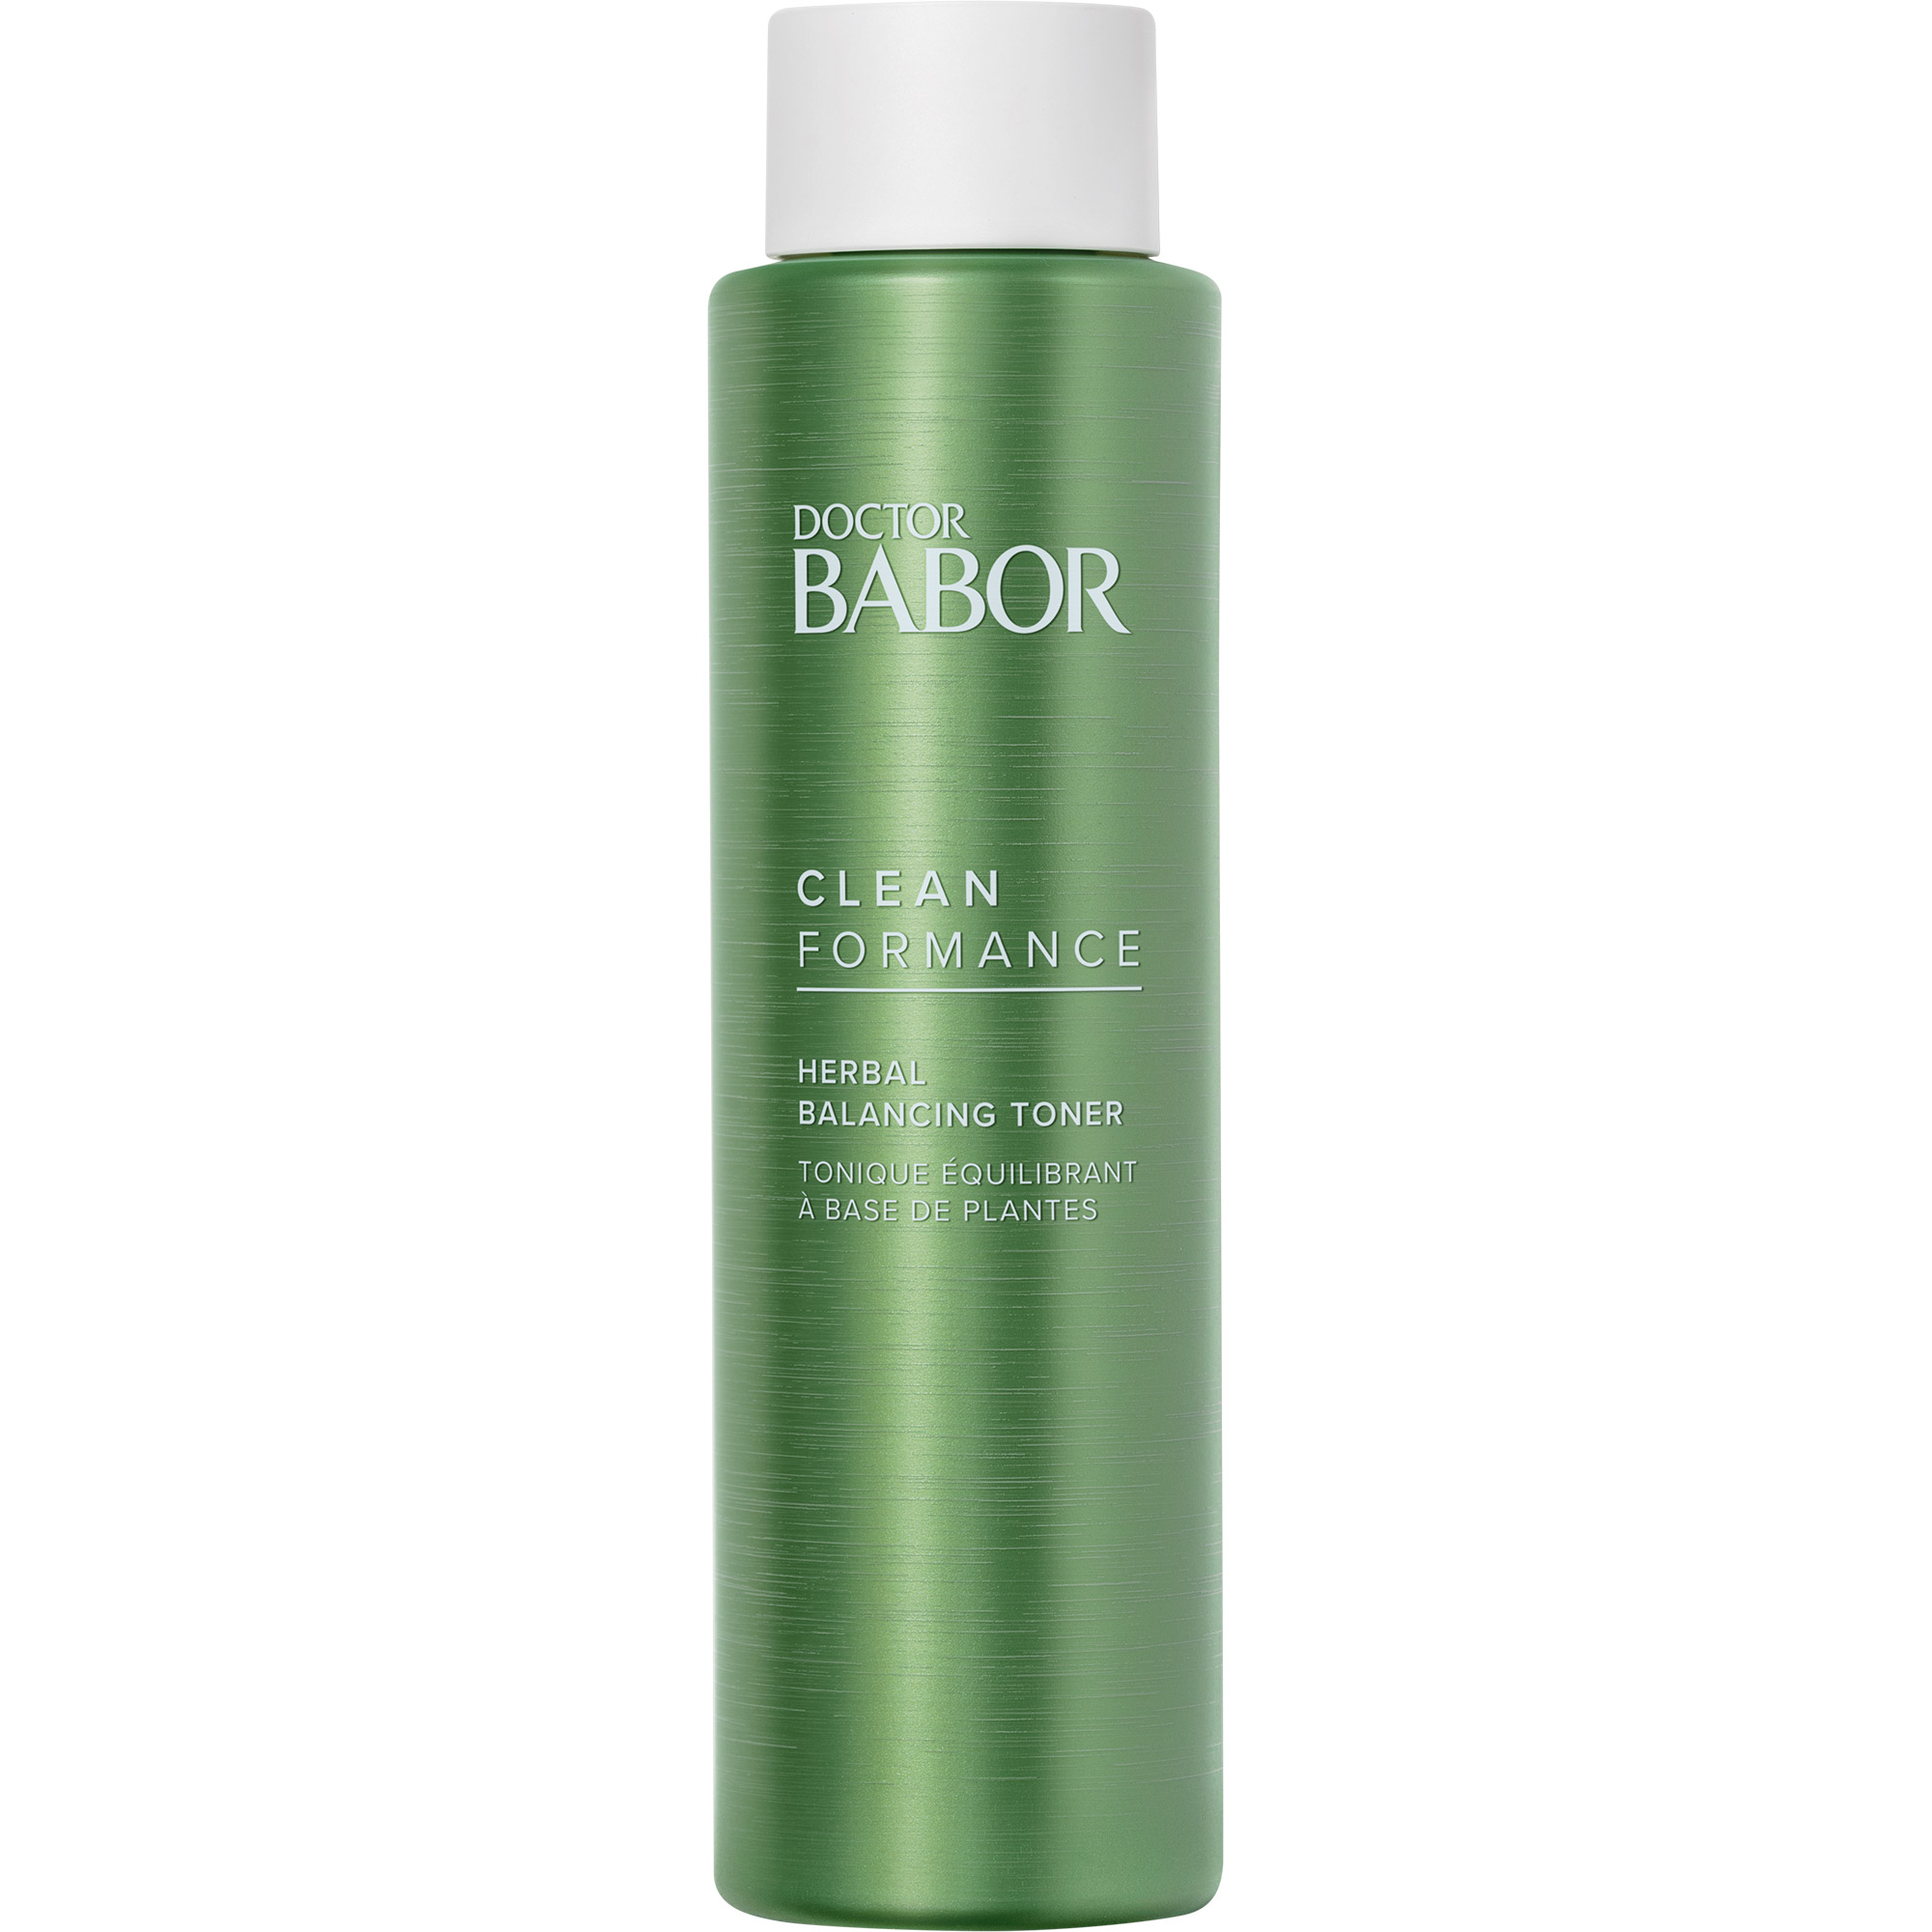 BABOR Doctor Babor CleanFormance Herbal Balancing Toner 200 ml